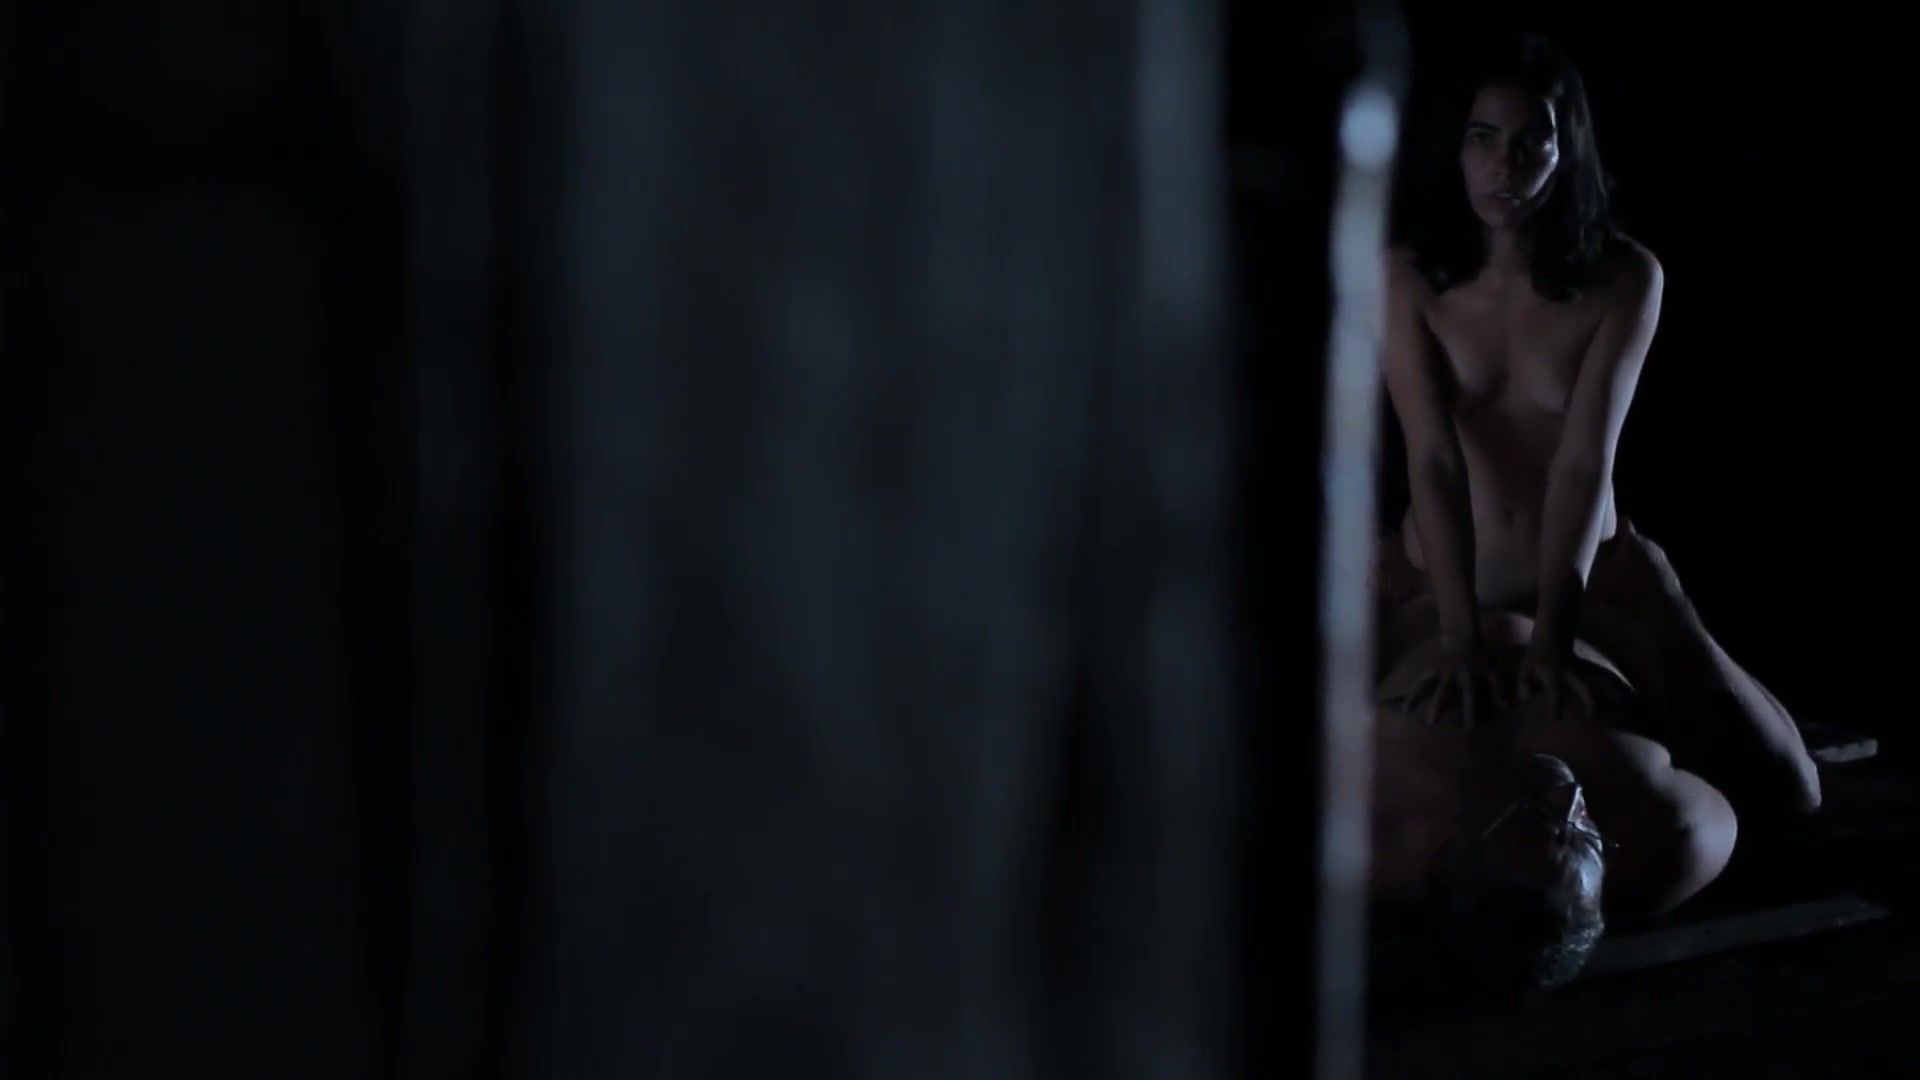 DreamMovies Leticia Leon naked- Molina's Borealis (2013) AdblockPlus - 1